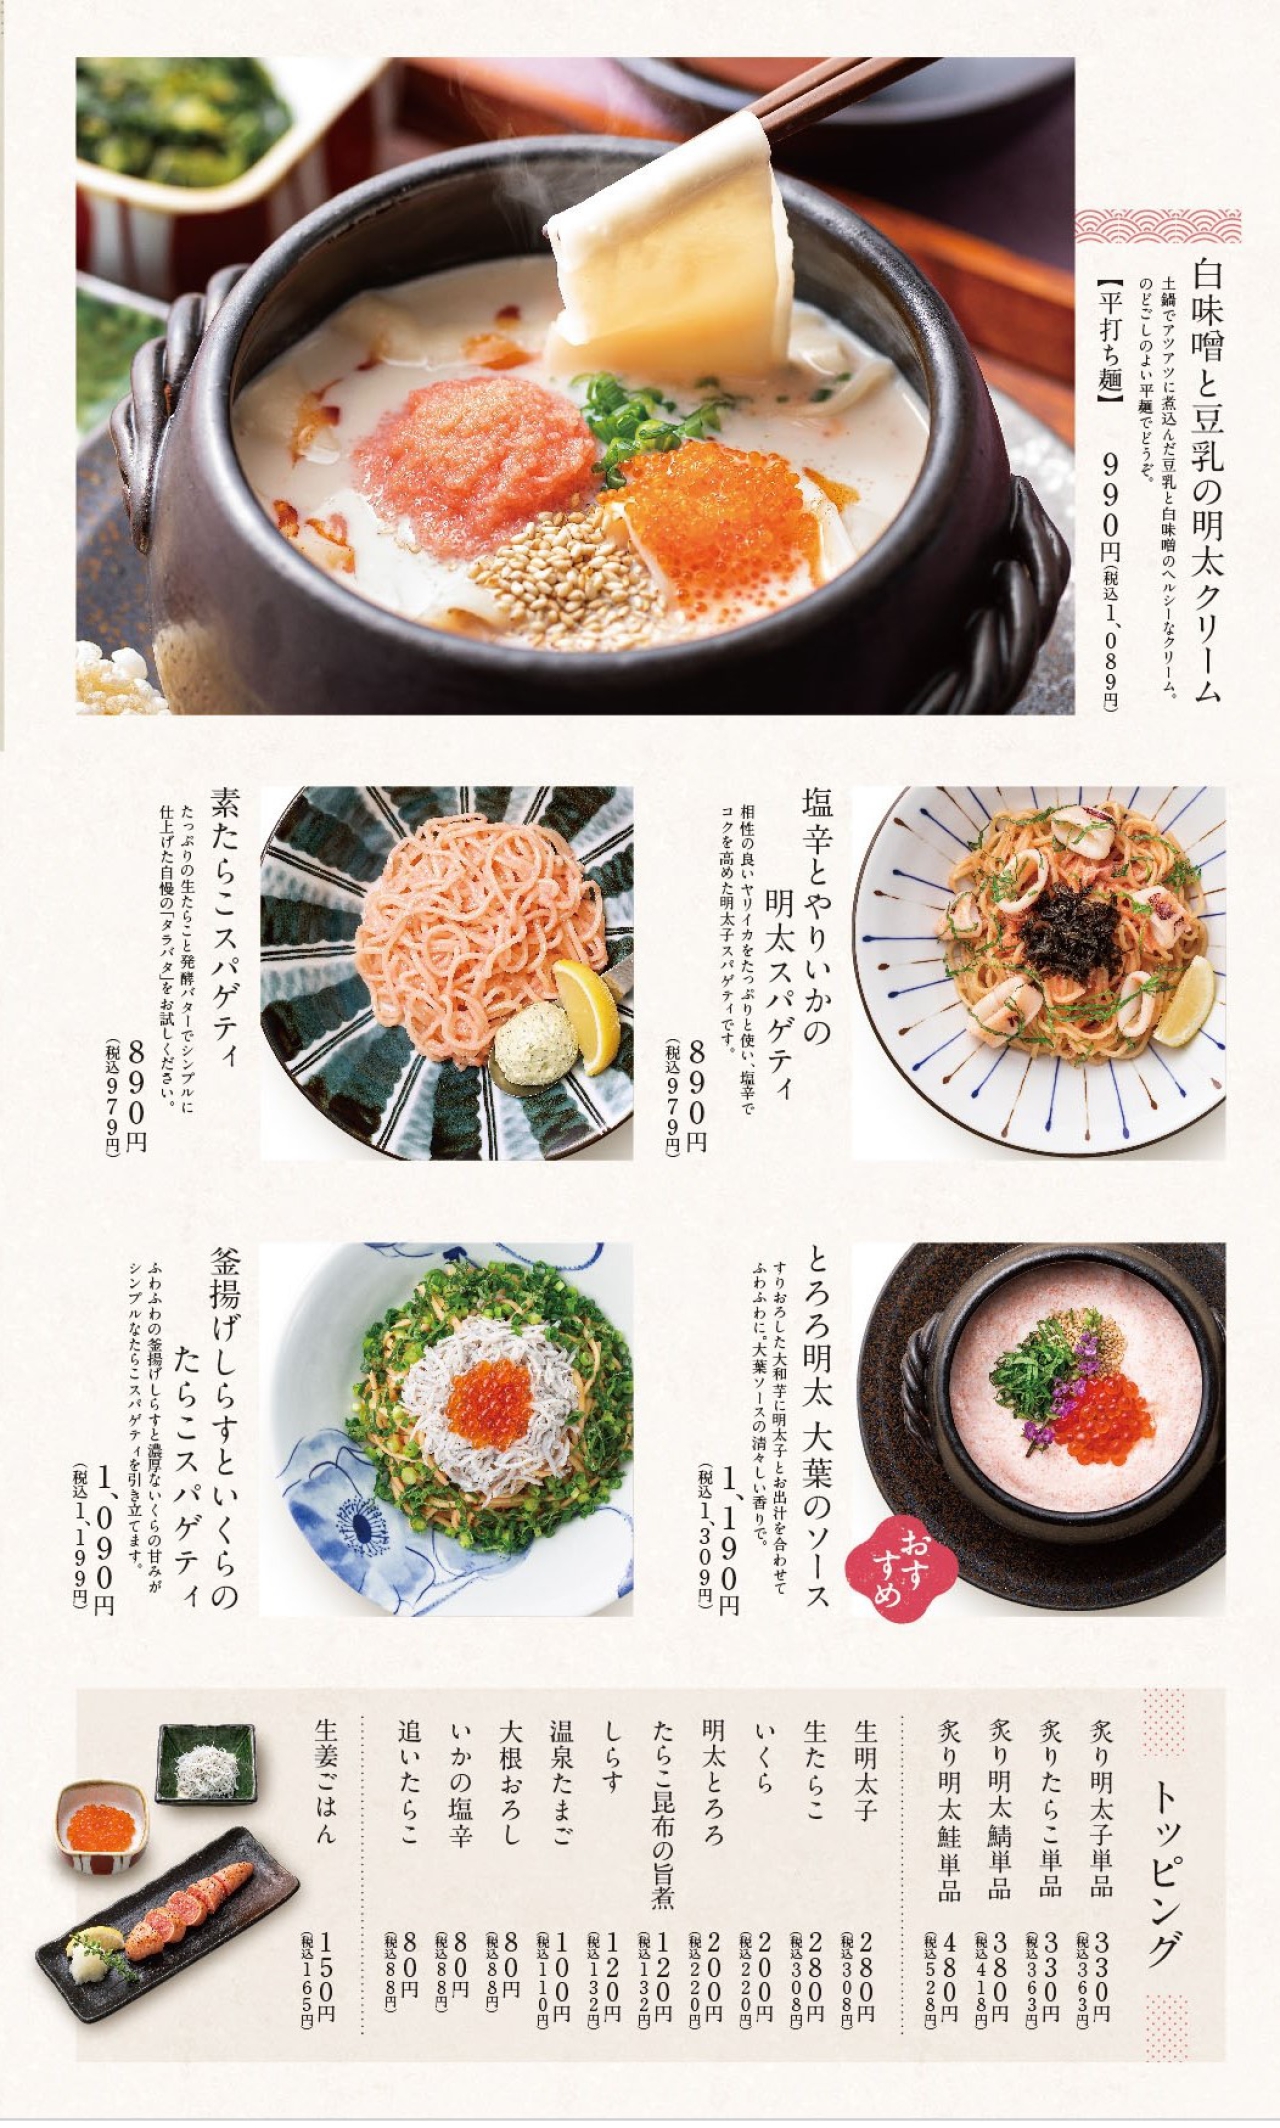 Minami Ikebukuro store menu table ②